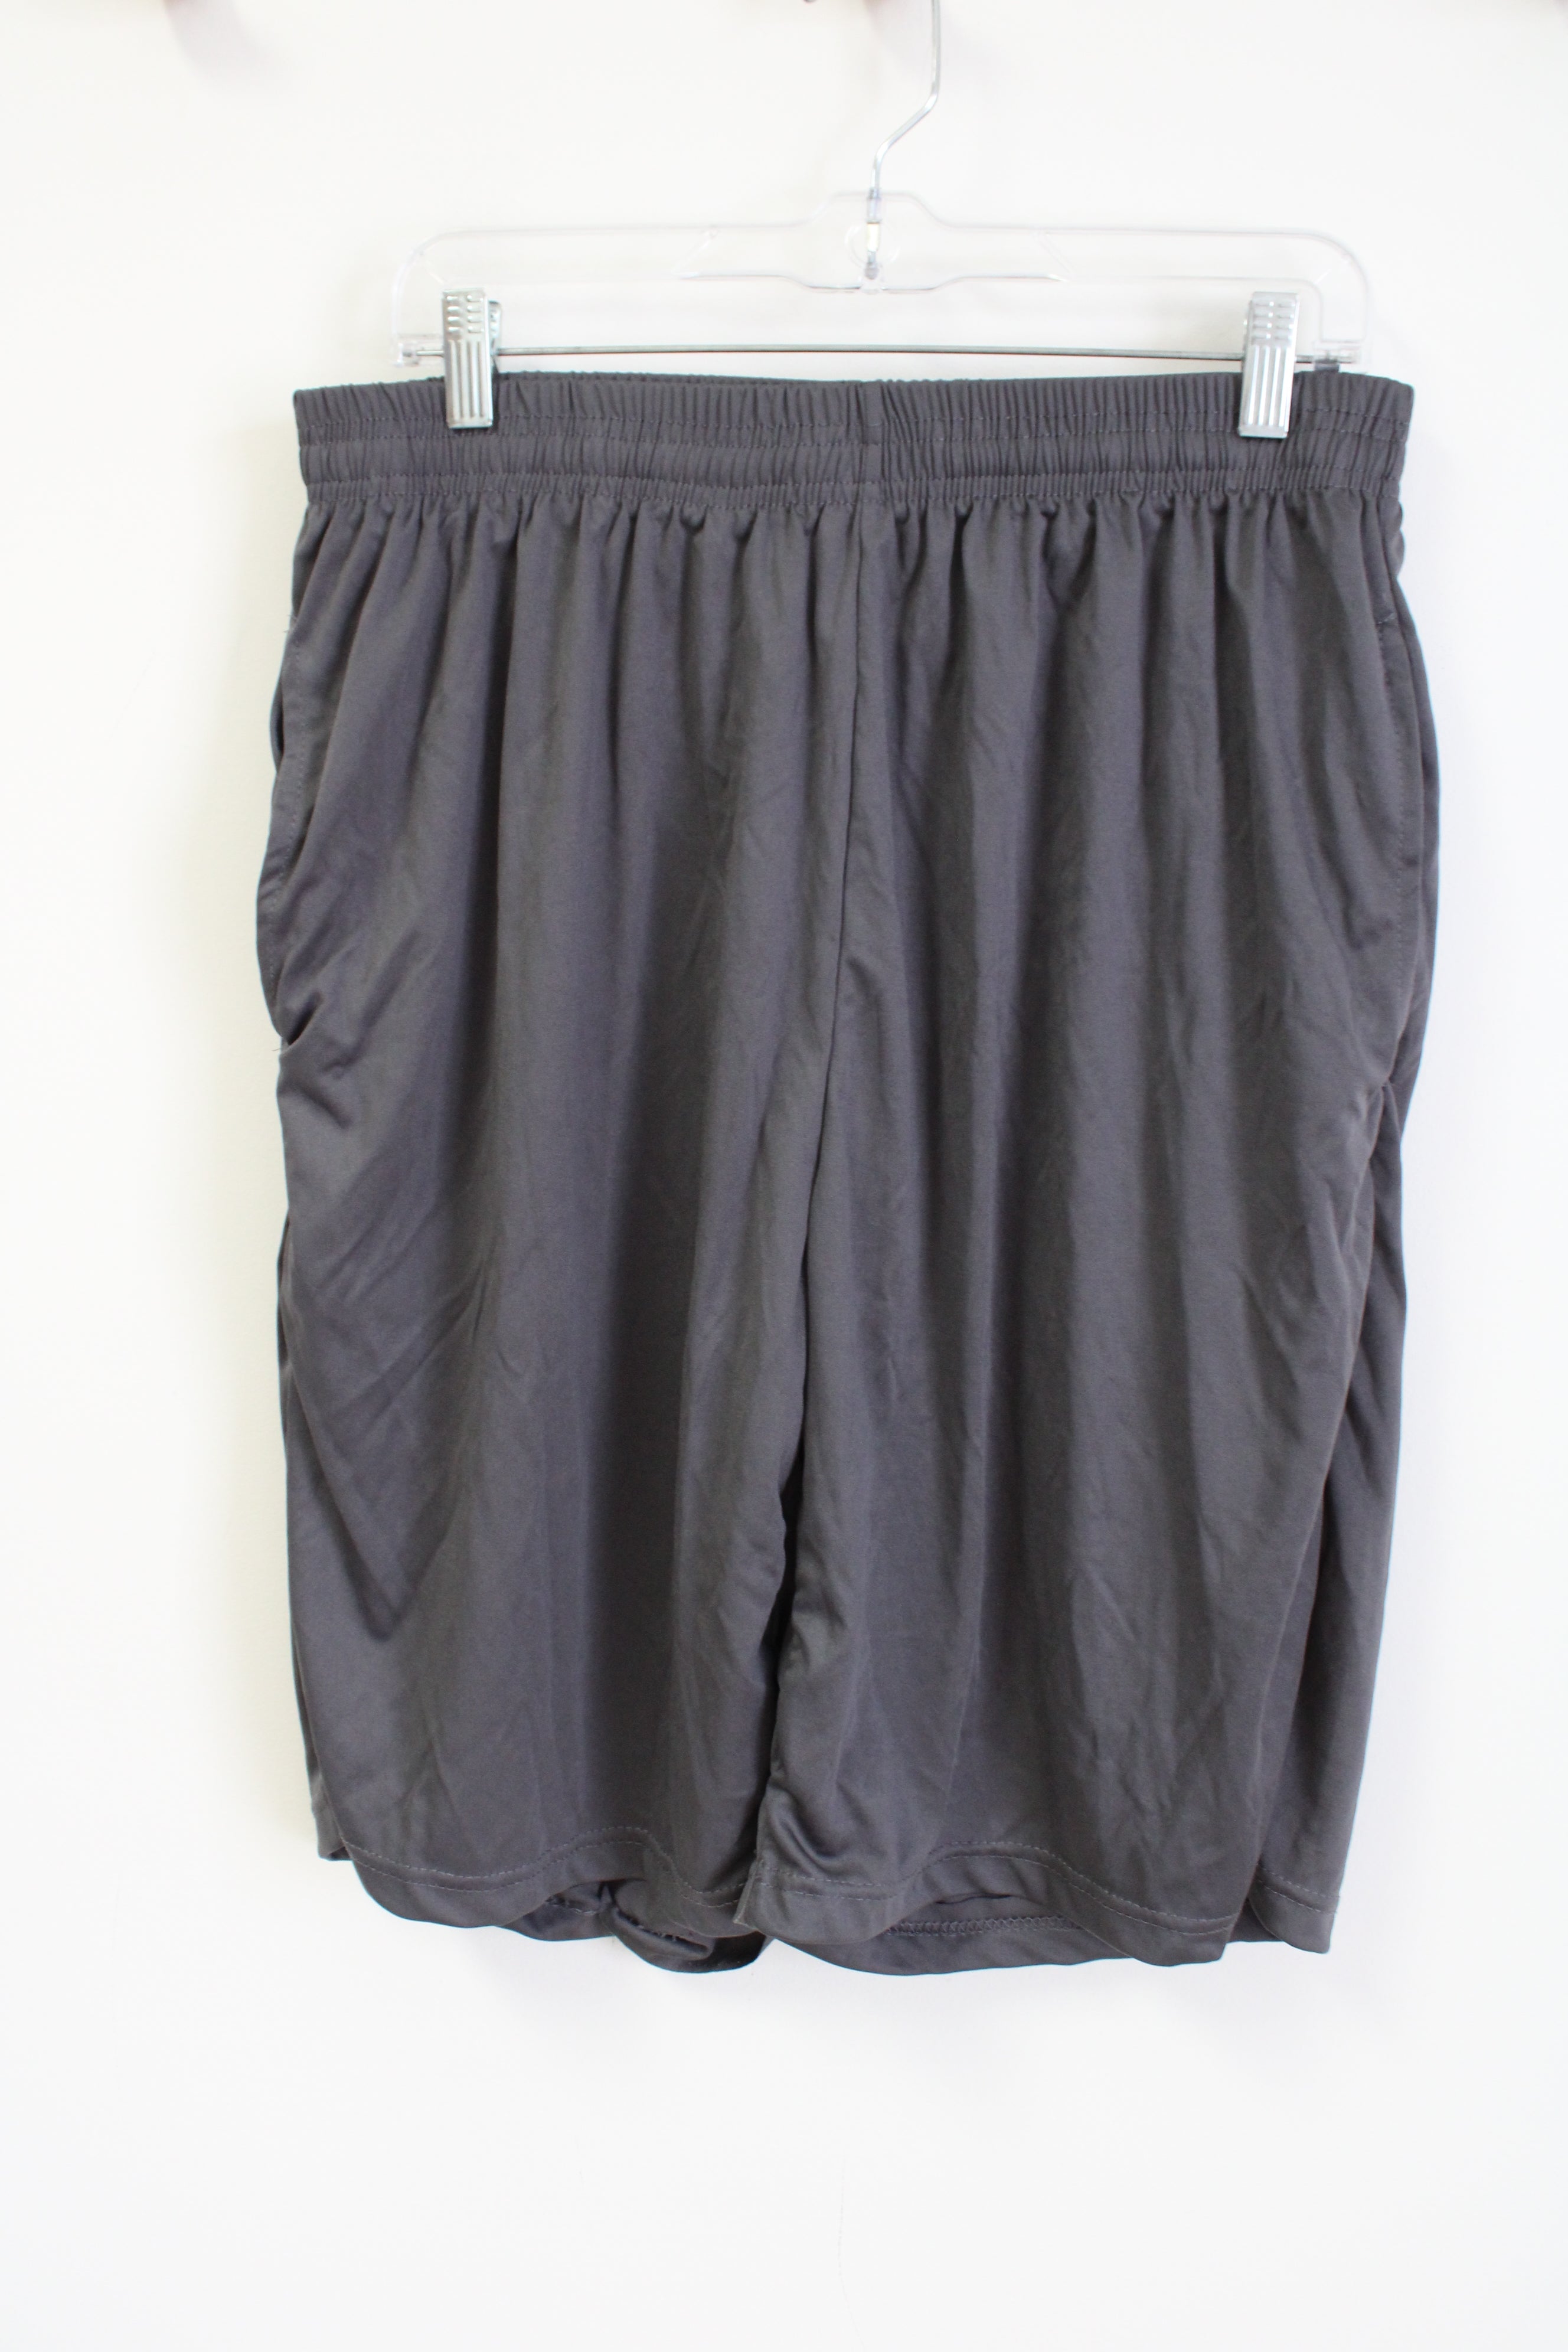 Ultra Performance Gray Athletic Shorts | XL